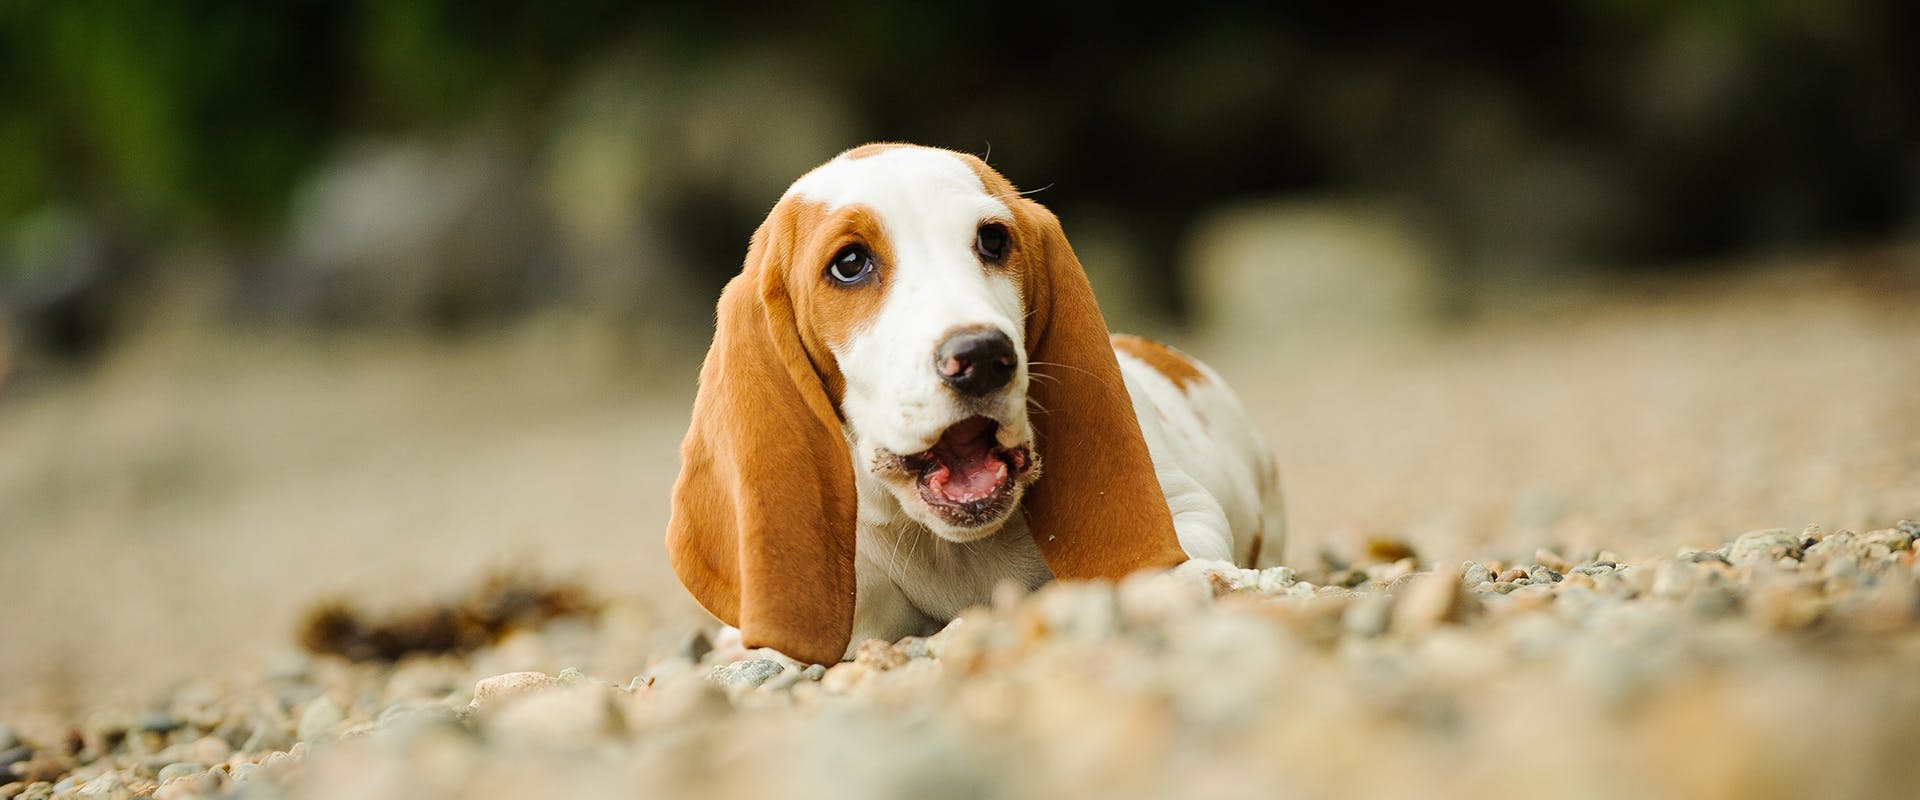 how much for basset hound puppies